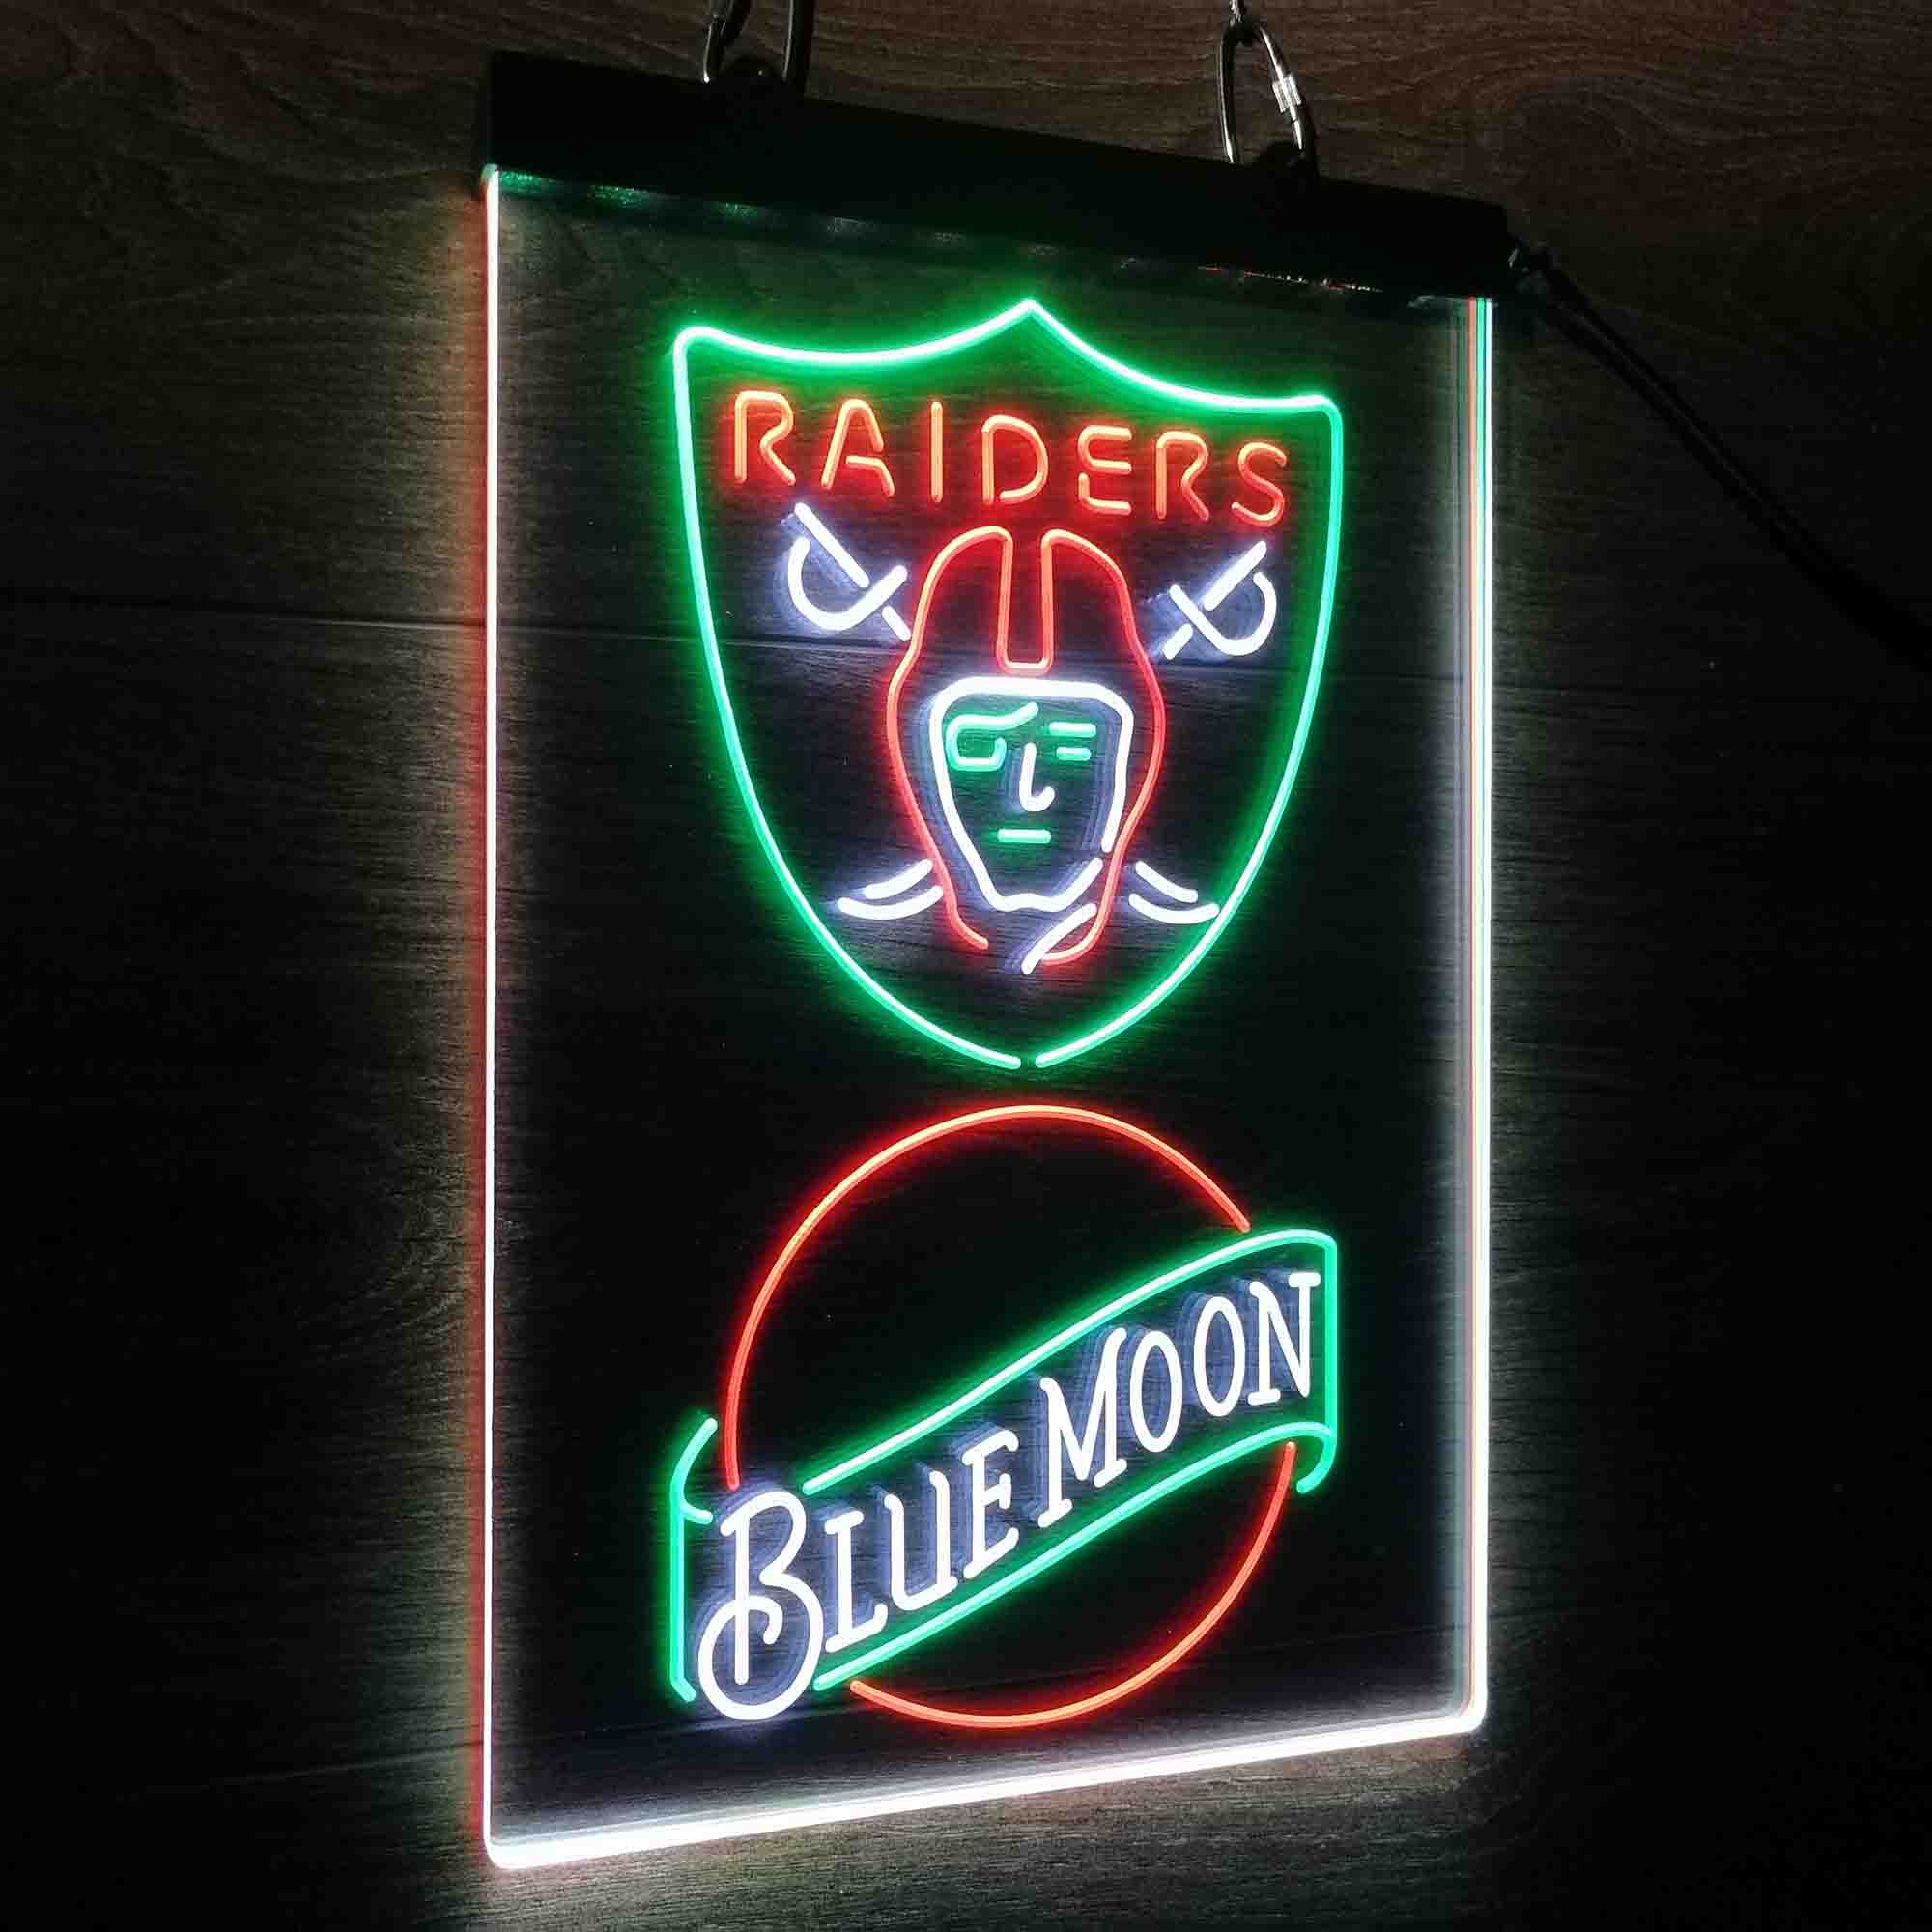 Blue Moon Bar Oakland Raiders Est. 1960 Neon LED Sign 3 Colors